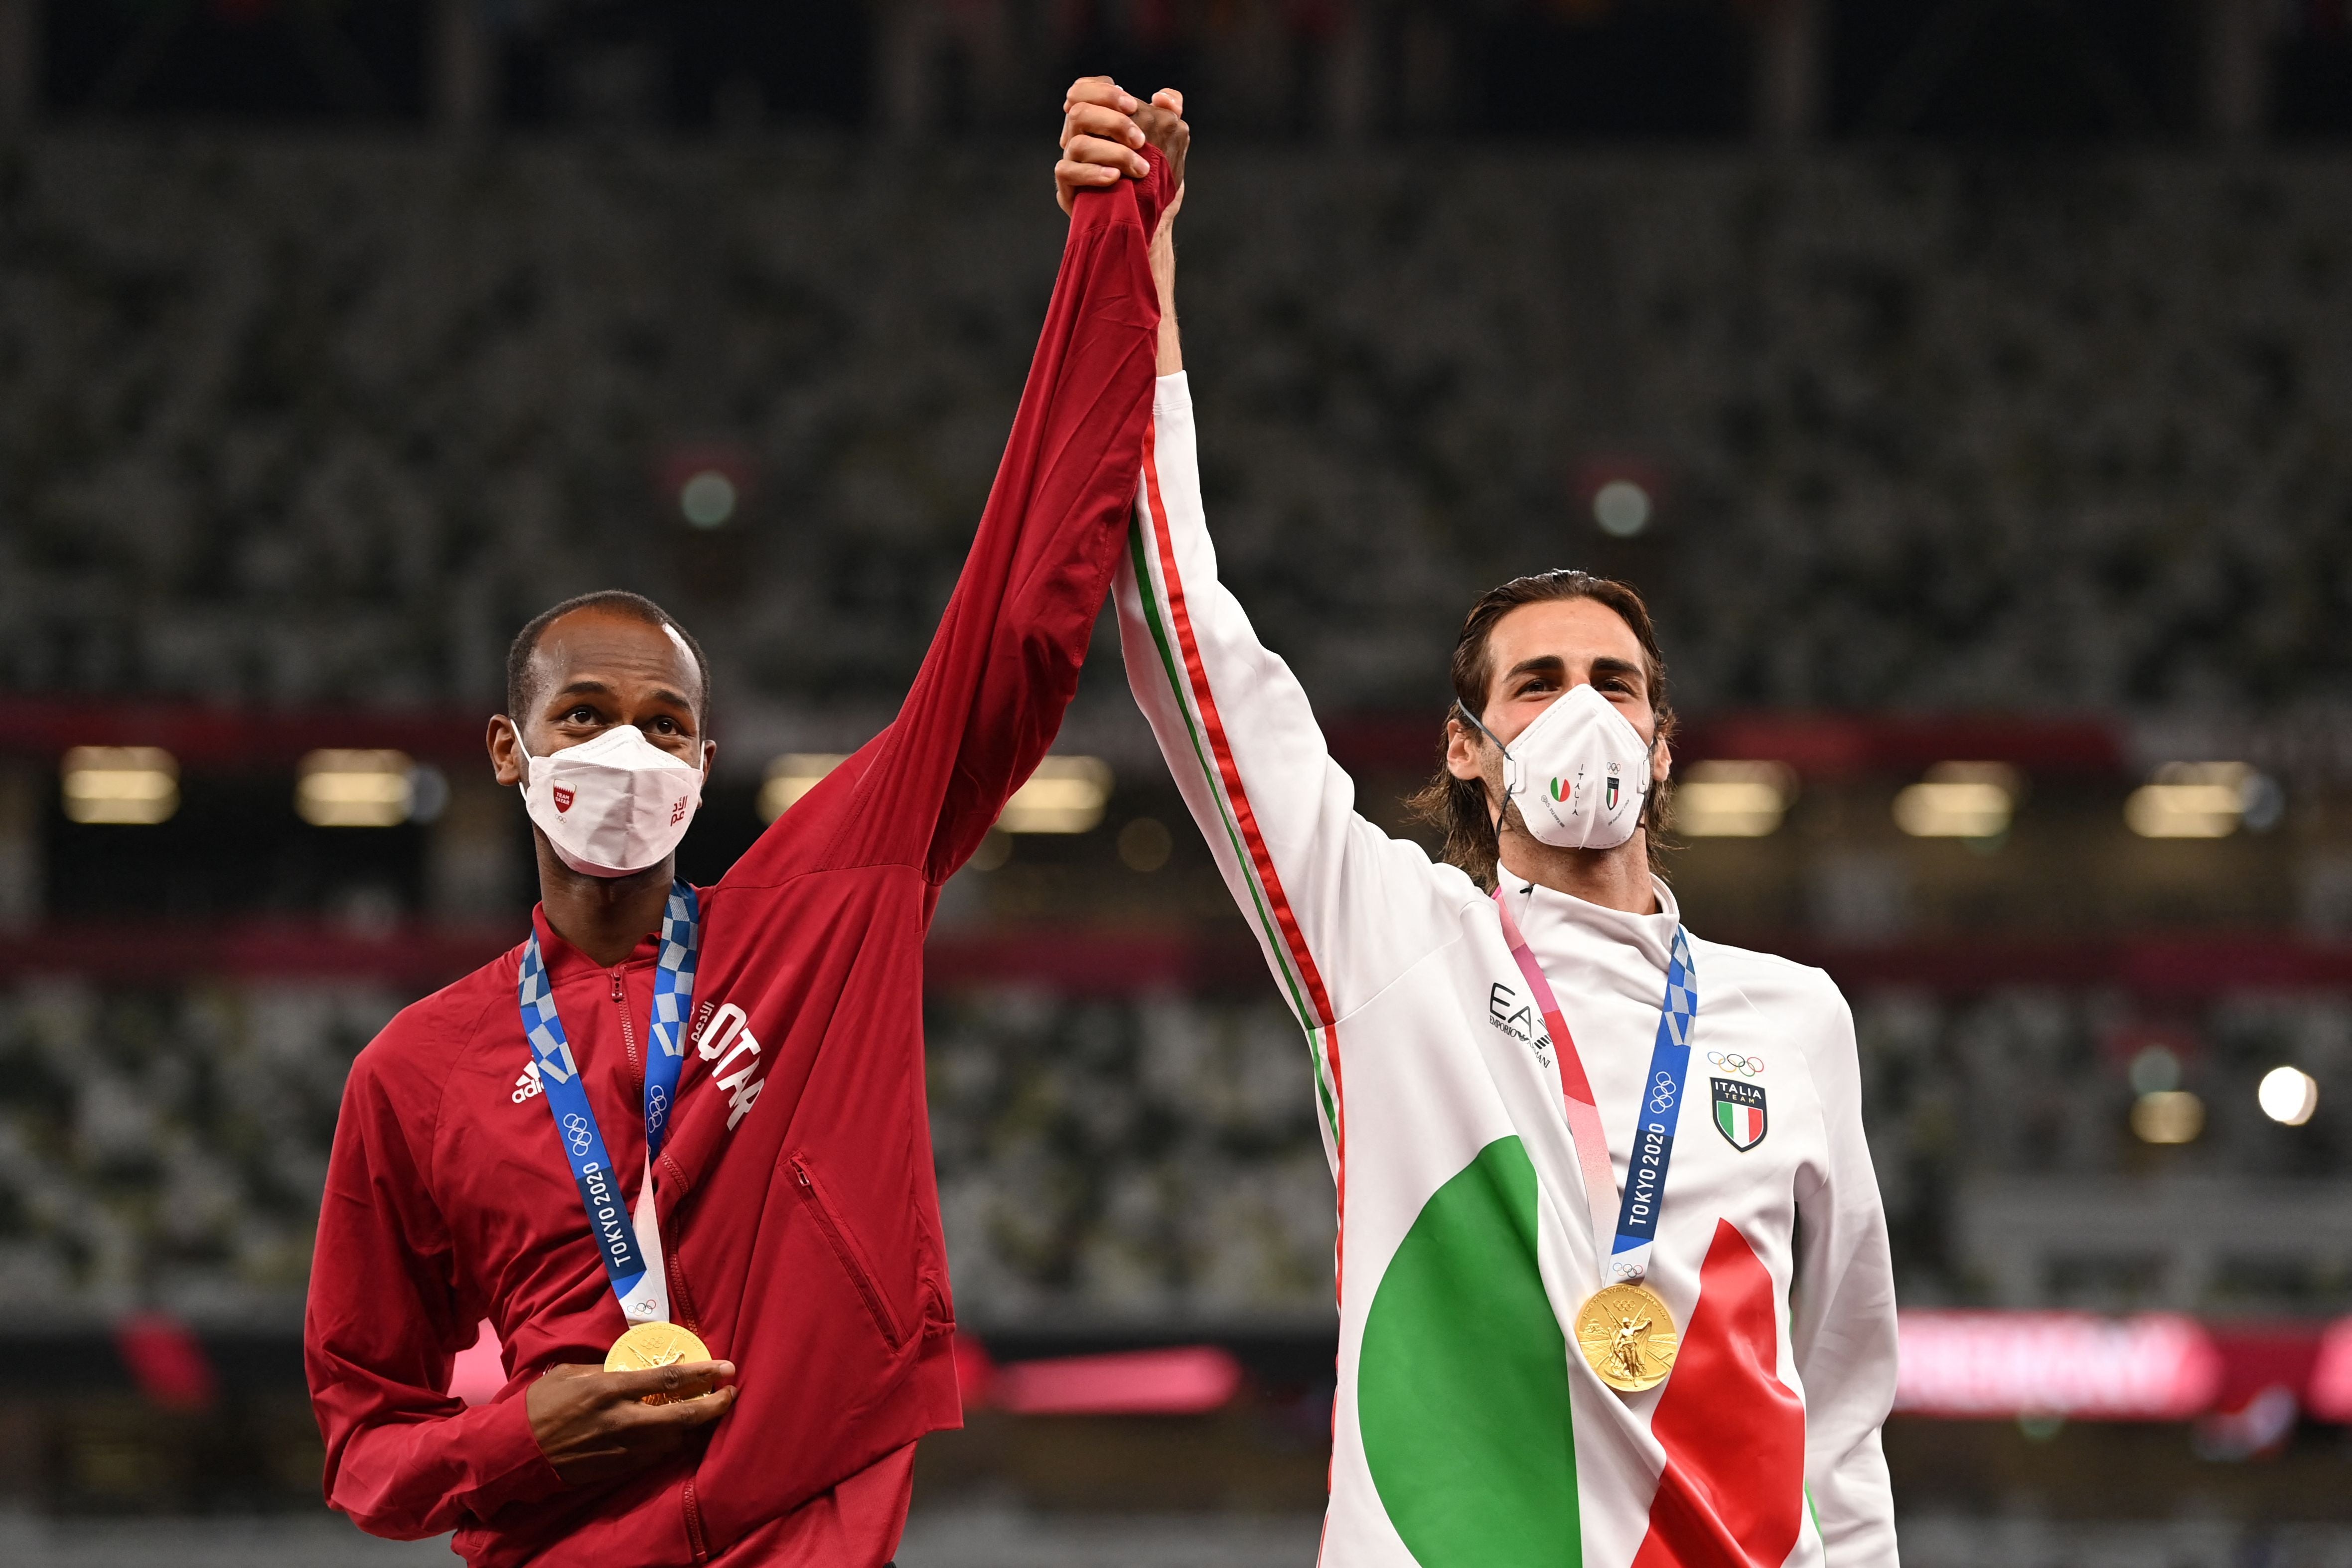 Mutaz Barshim and Gianmarco Tamberi celebrate their shared gold